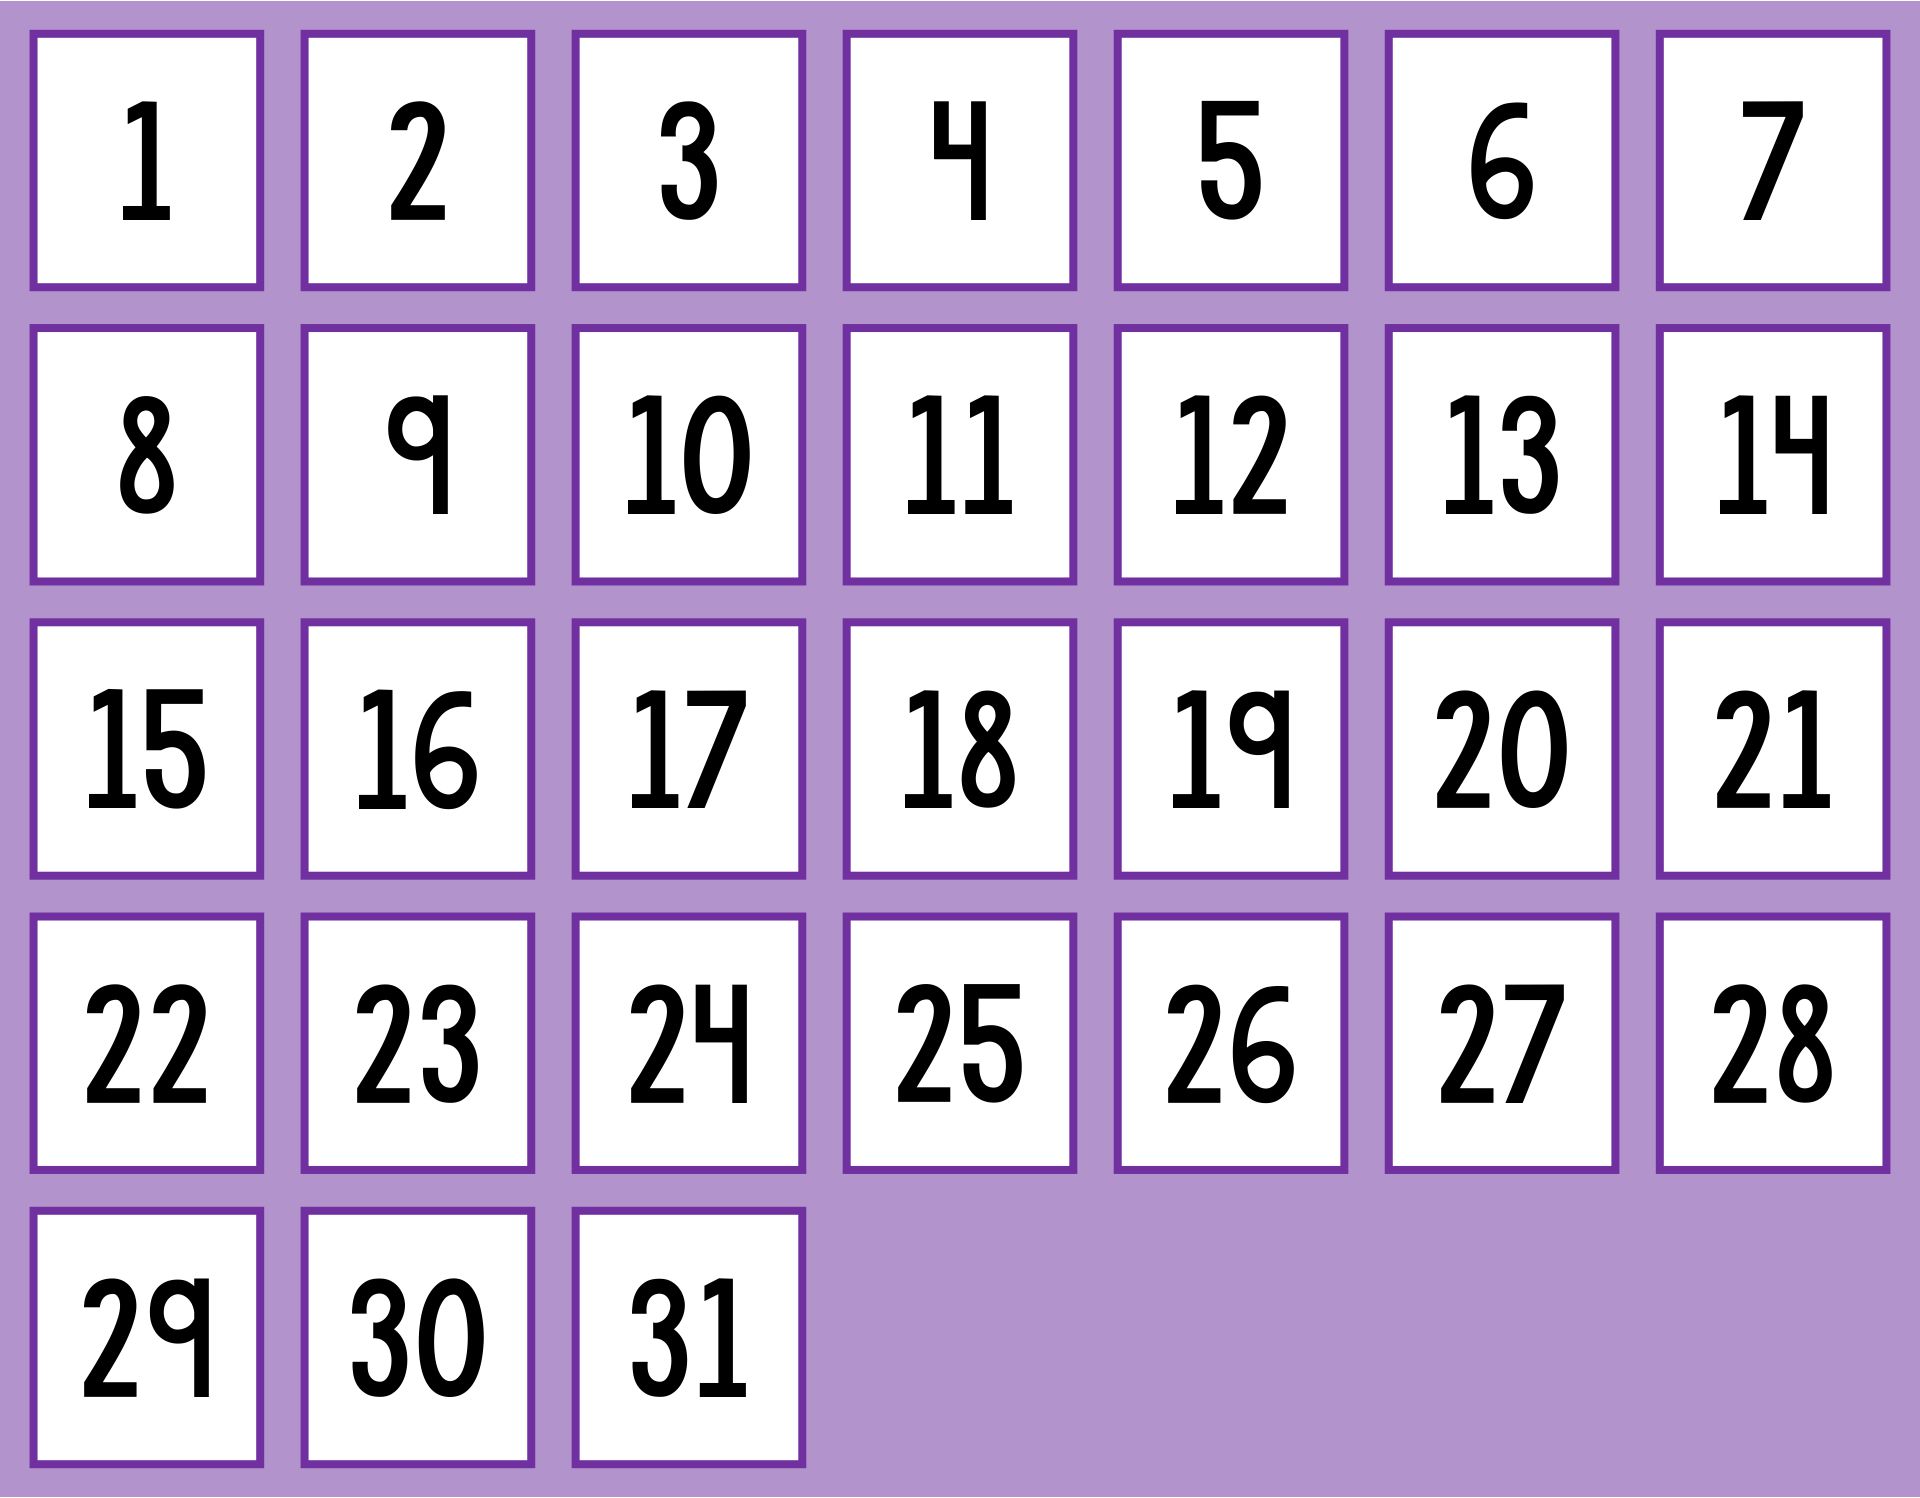 Printable Classroom Calendar Numbers